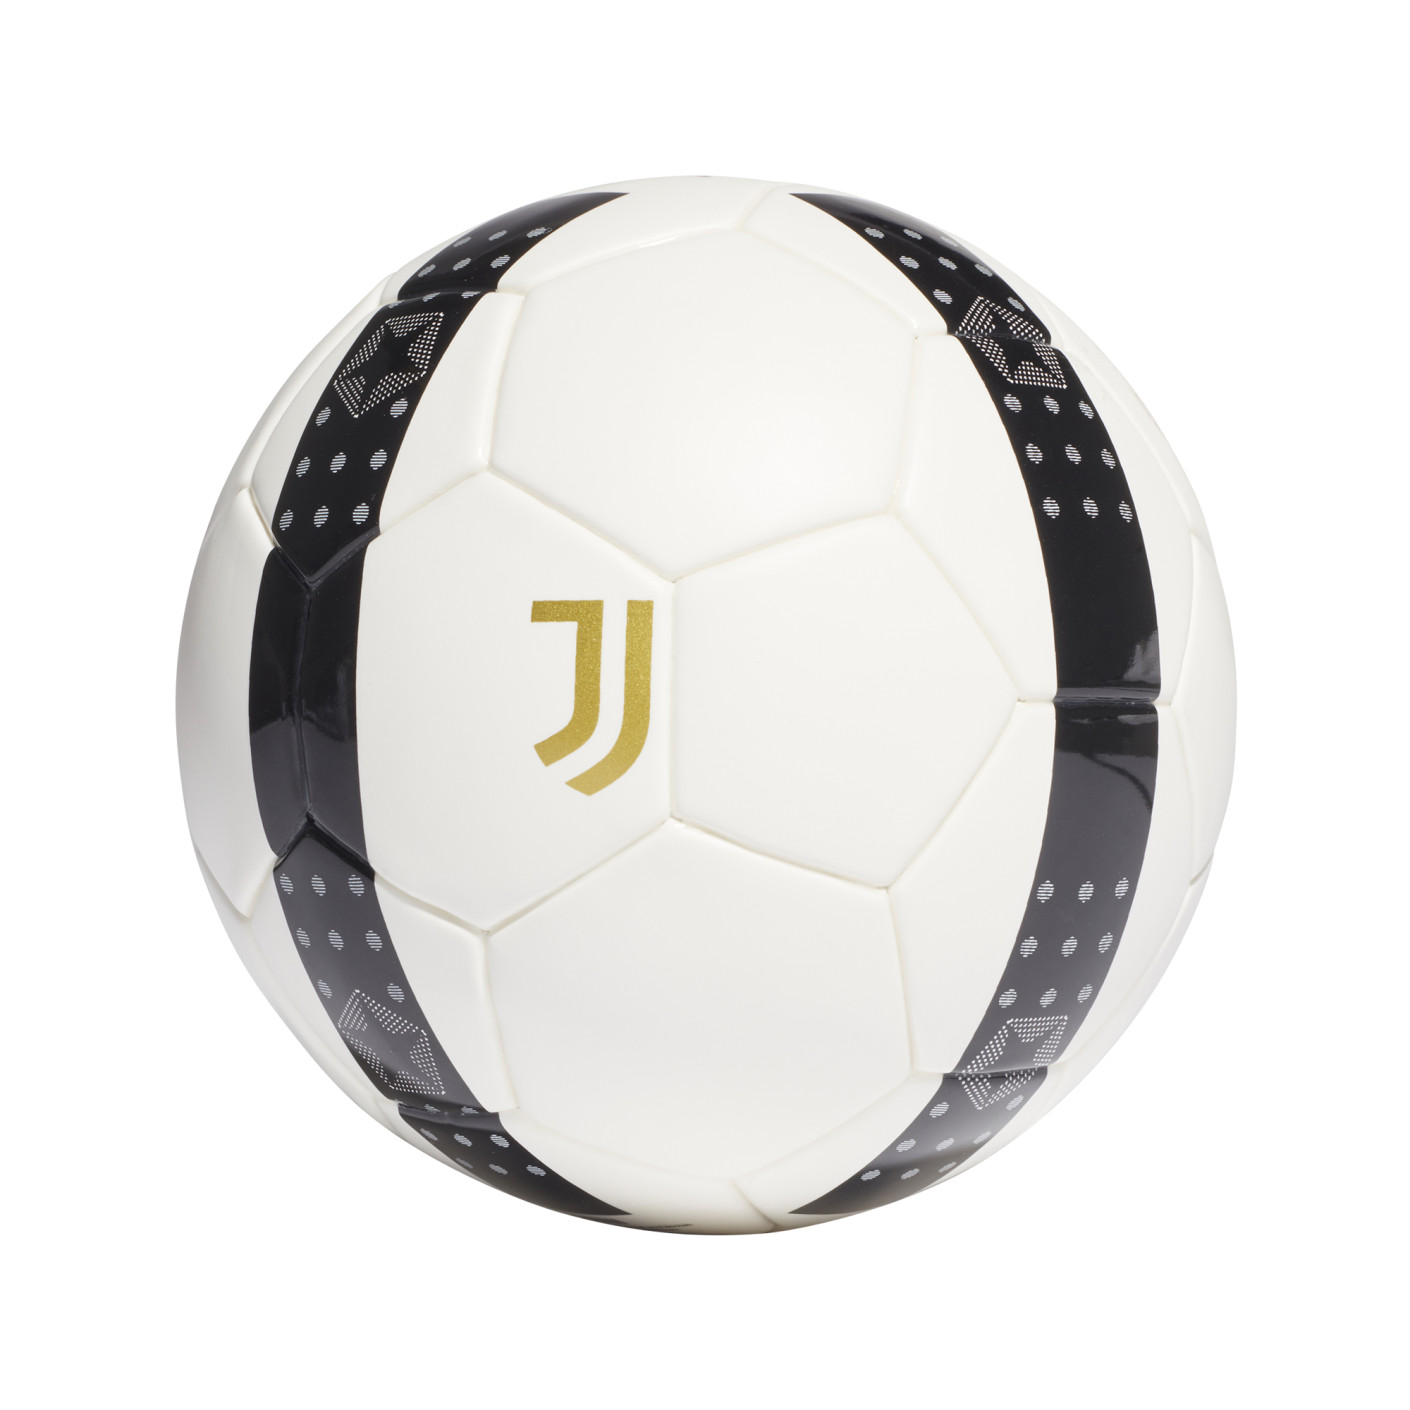 Adidas Juventus Mini Football Taille 1 Blanc Noir Or